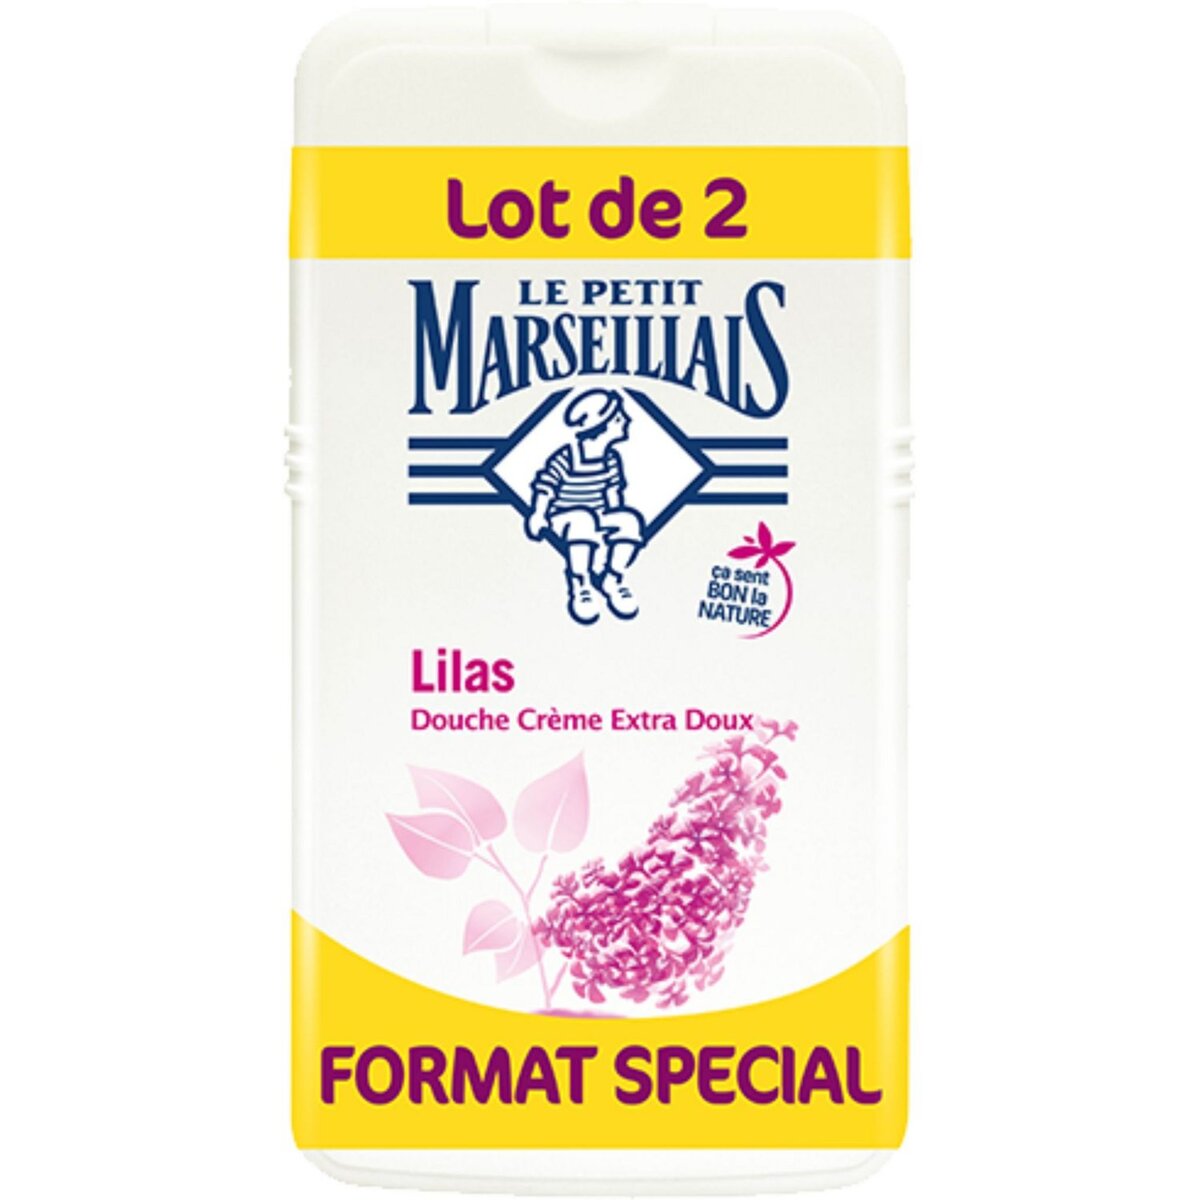 LE PETIT MARSEILLAIS Le petit Marseillais gel douche extra-doux lilas 2x250ml